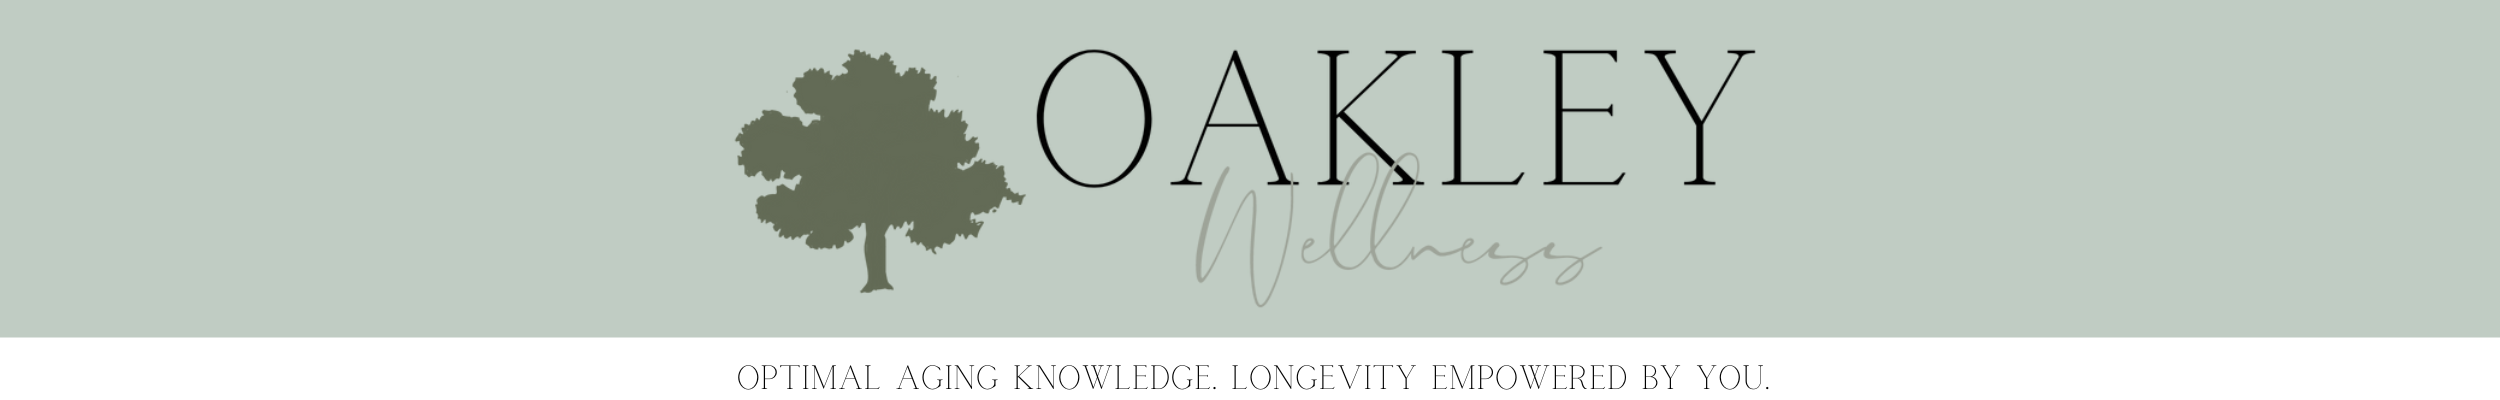 OAKLEY Wellness, LLC